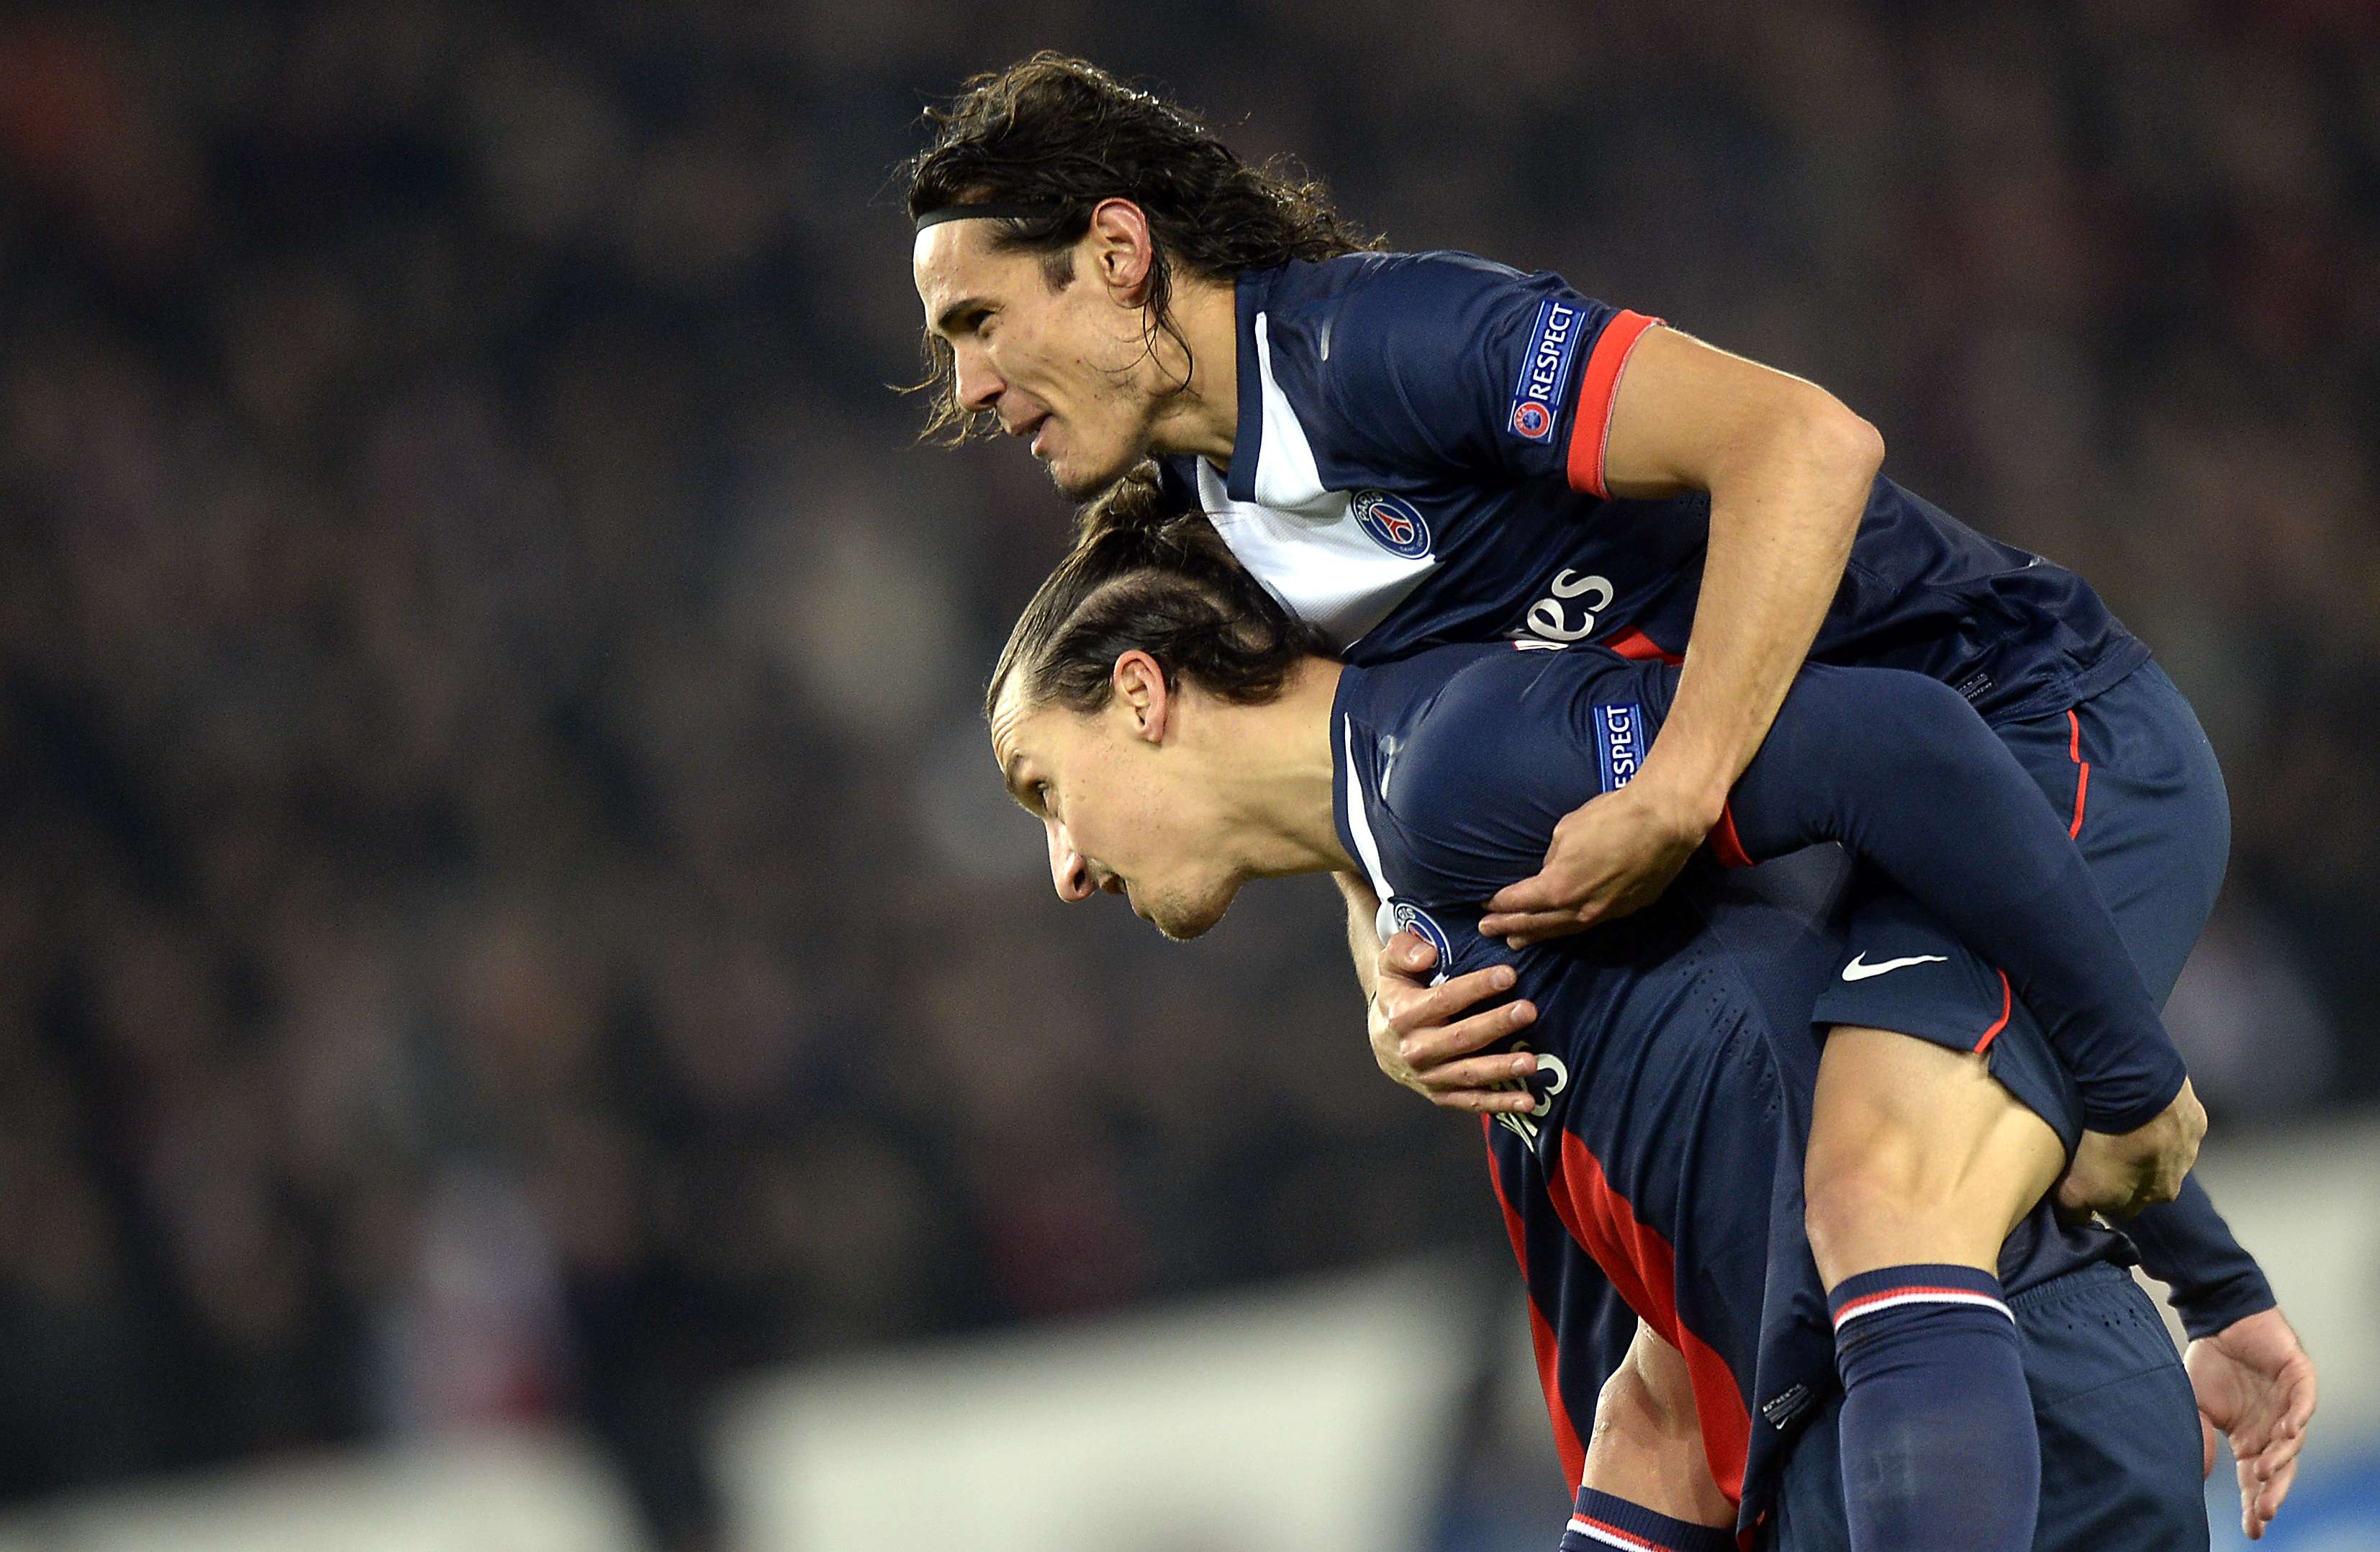 Paris-Saint Germain players Zlatan Ibrahimovic and Edinson Cavani